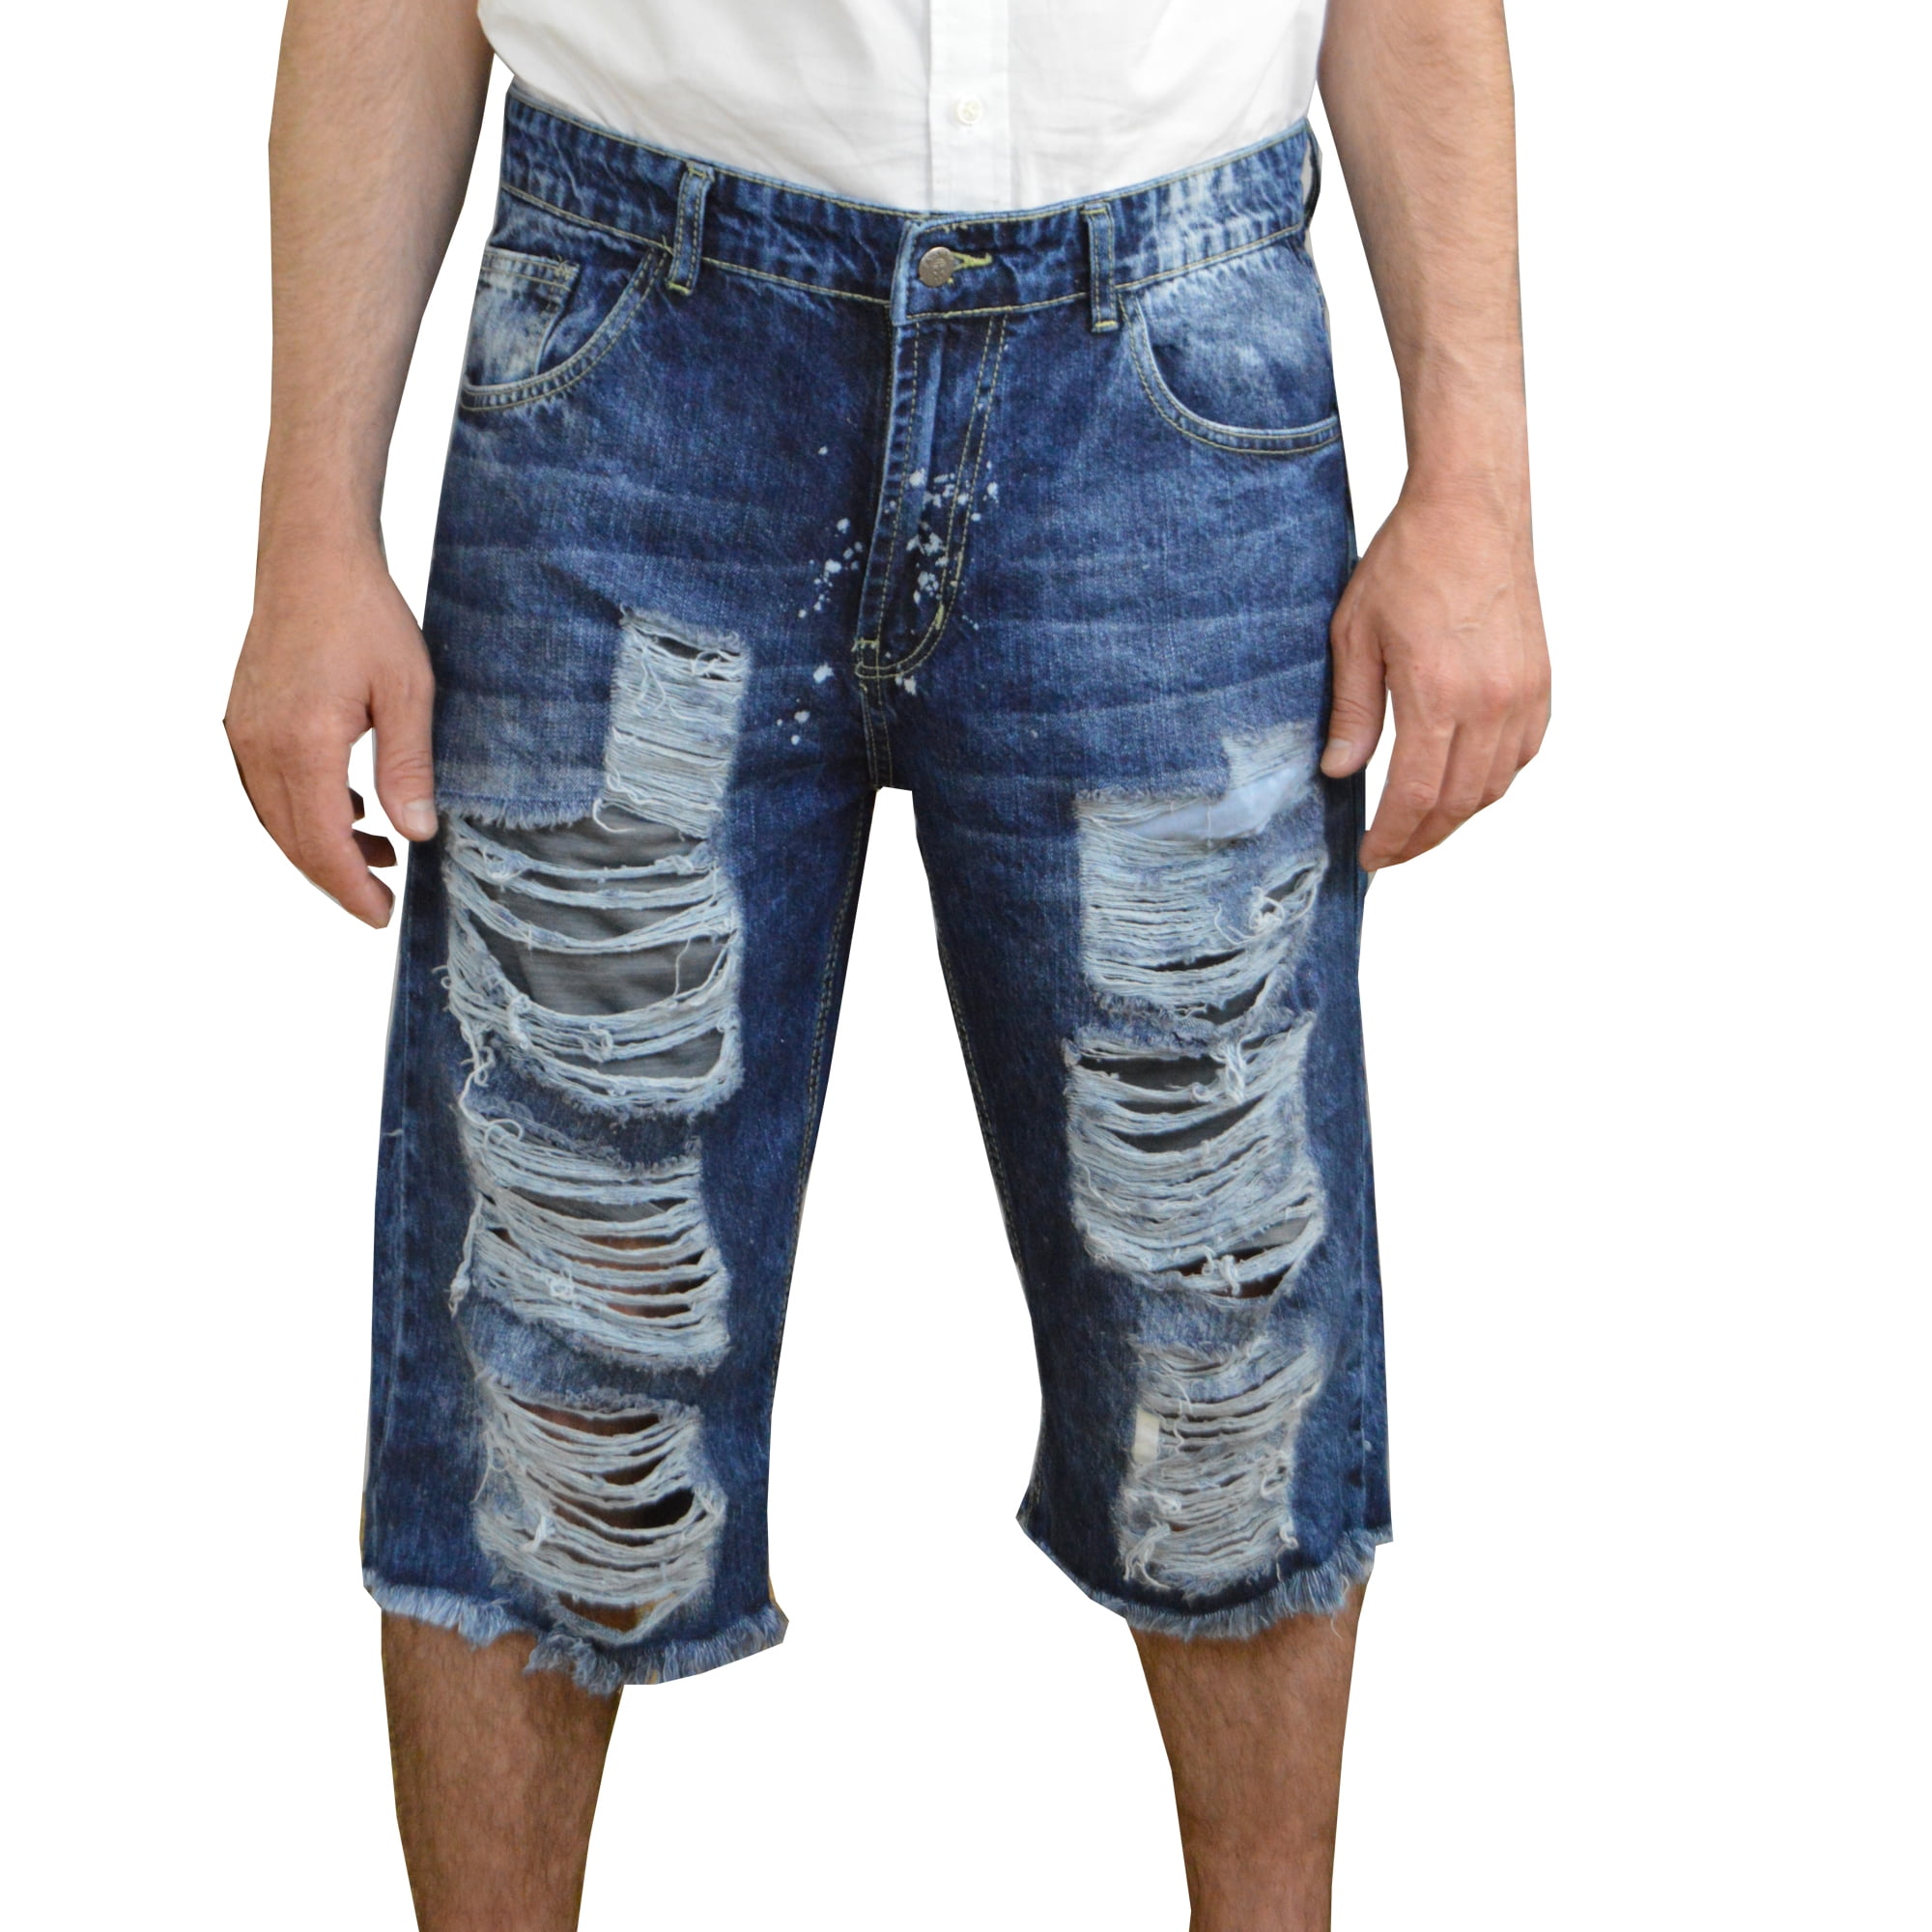 ALOVEMO Men Cotton Distressed Denim Shorts Ripped Jeans Casual Holes Pants Summer Short 2019